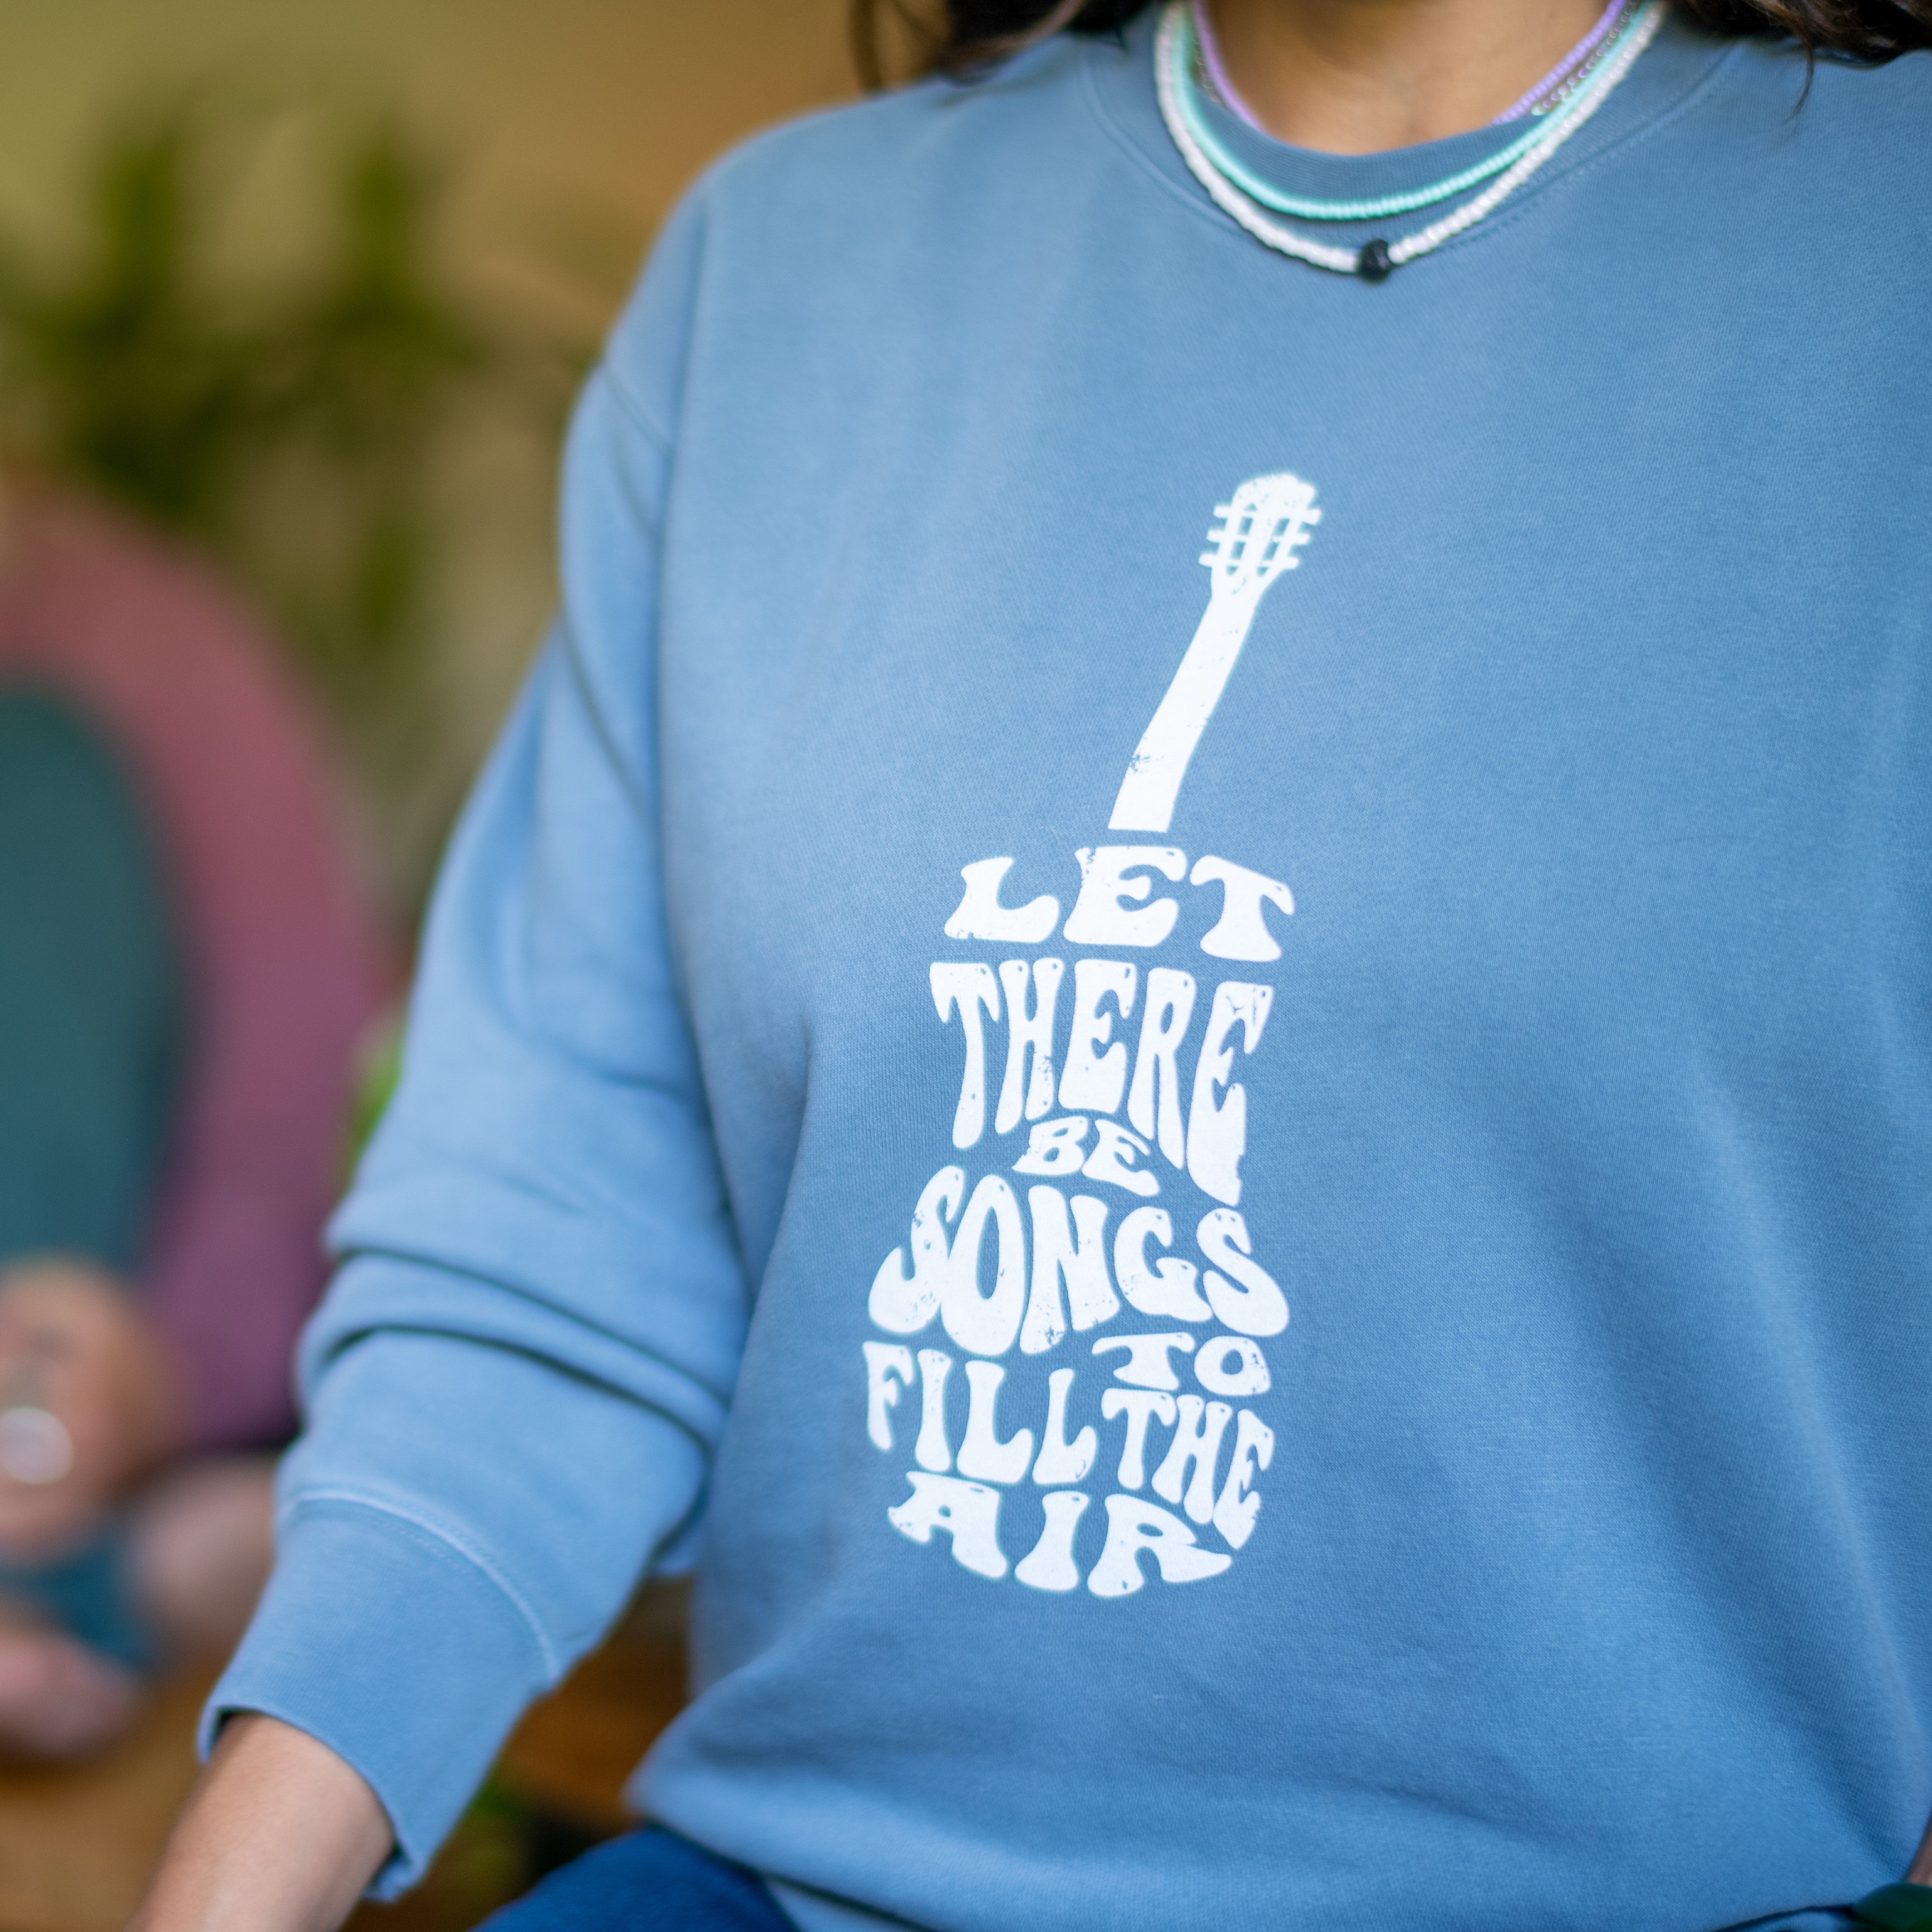 Grateful Dead Lyrics Sweatshirt Blue Ripple - Section 119